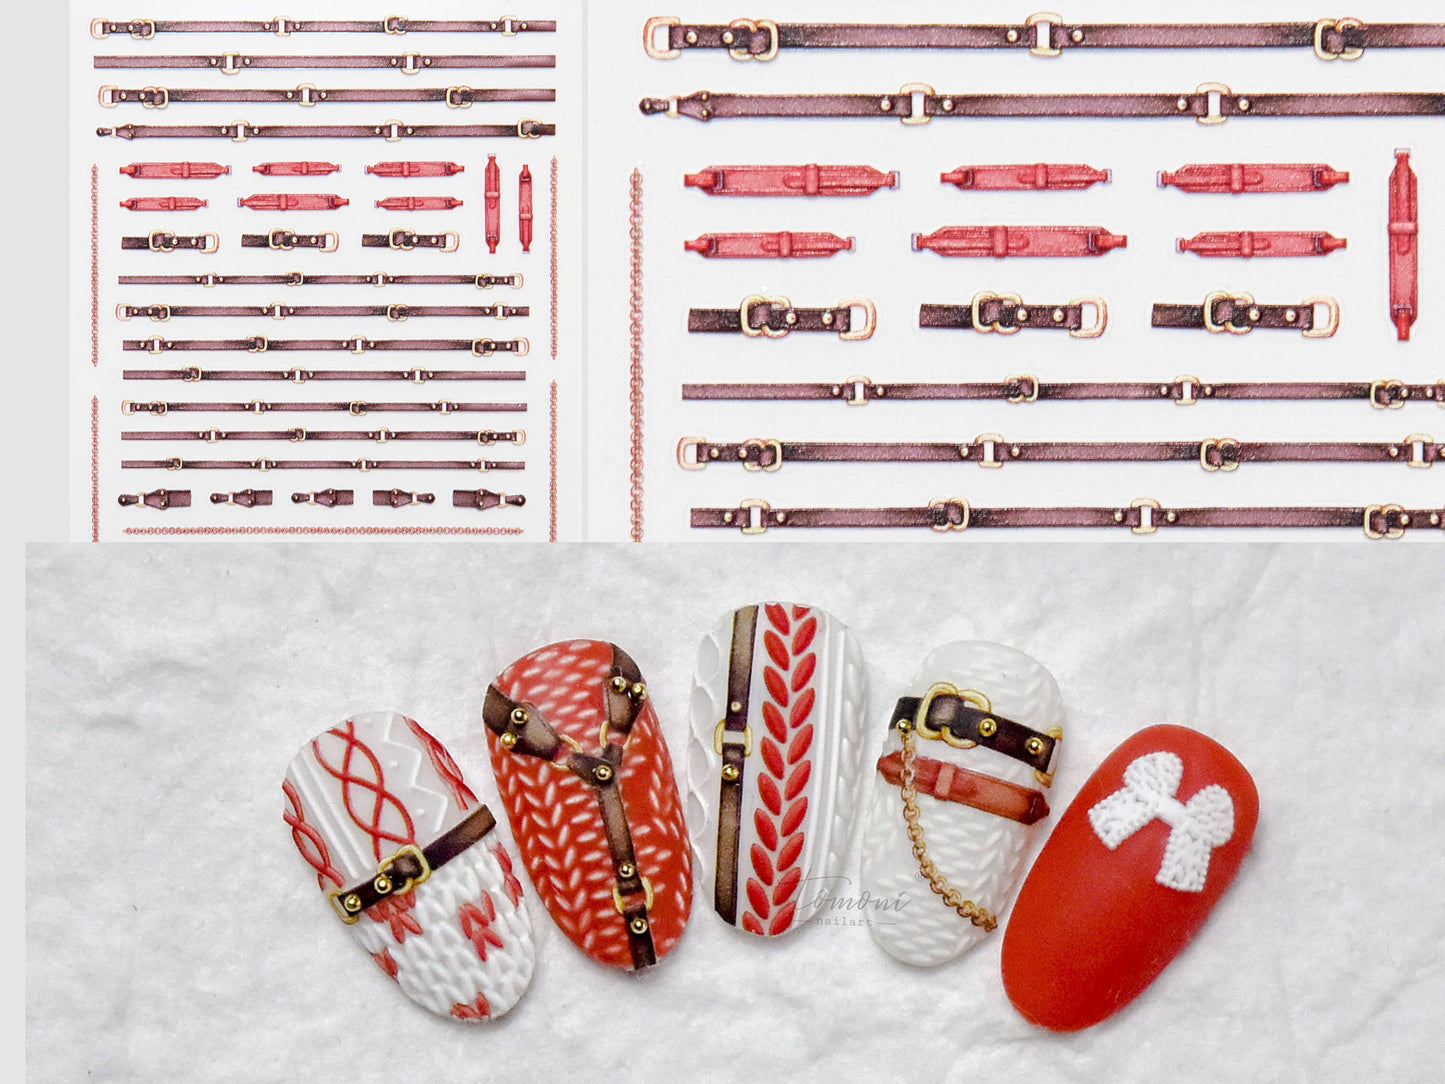 Buckle Belt 3D Embossed Nail Stickers/ Vintage Garment design nail art Stencil/ Watchband Strap Stripes Peel off sticker supplies